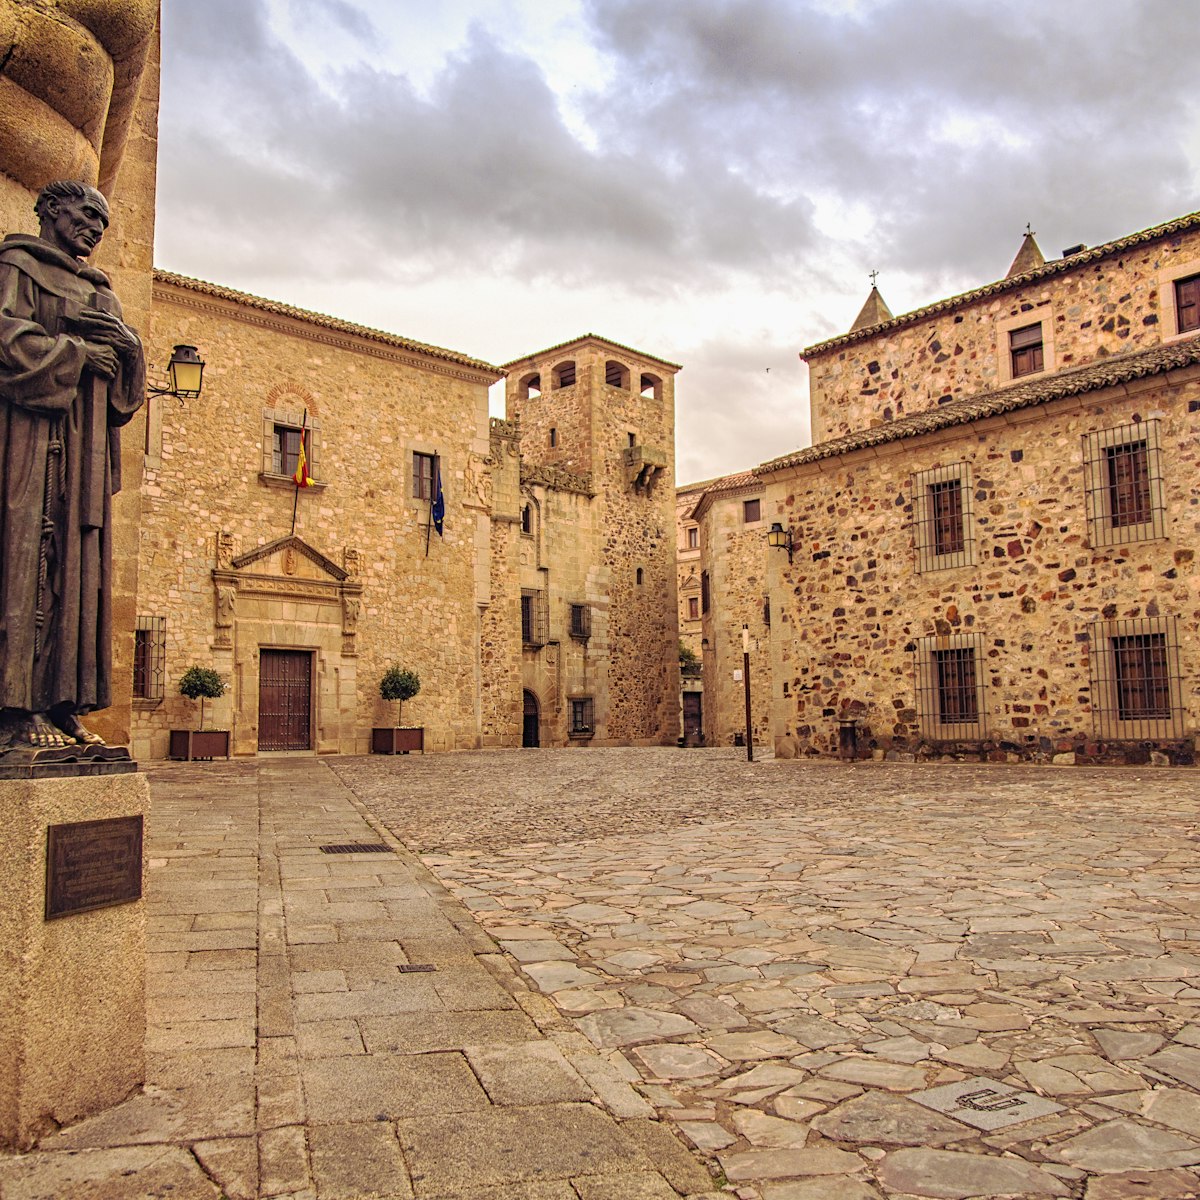 Plaza de Santa Maria and statue of San Pedro de Alcantara near the Cathedral of St. Mary, Caceres, Spain.